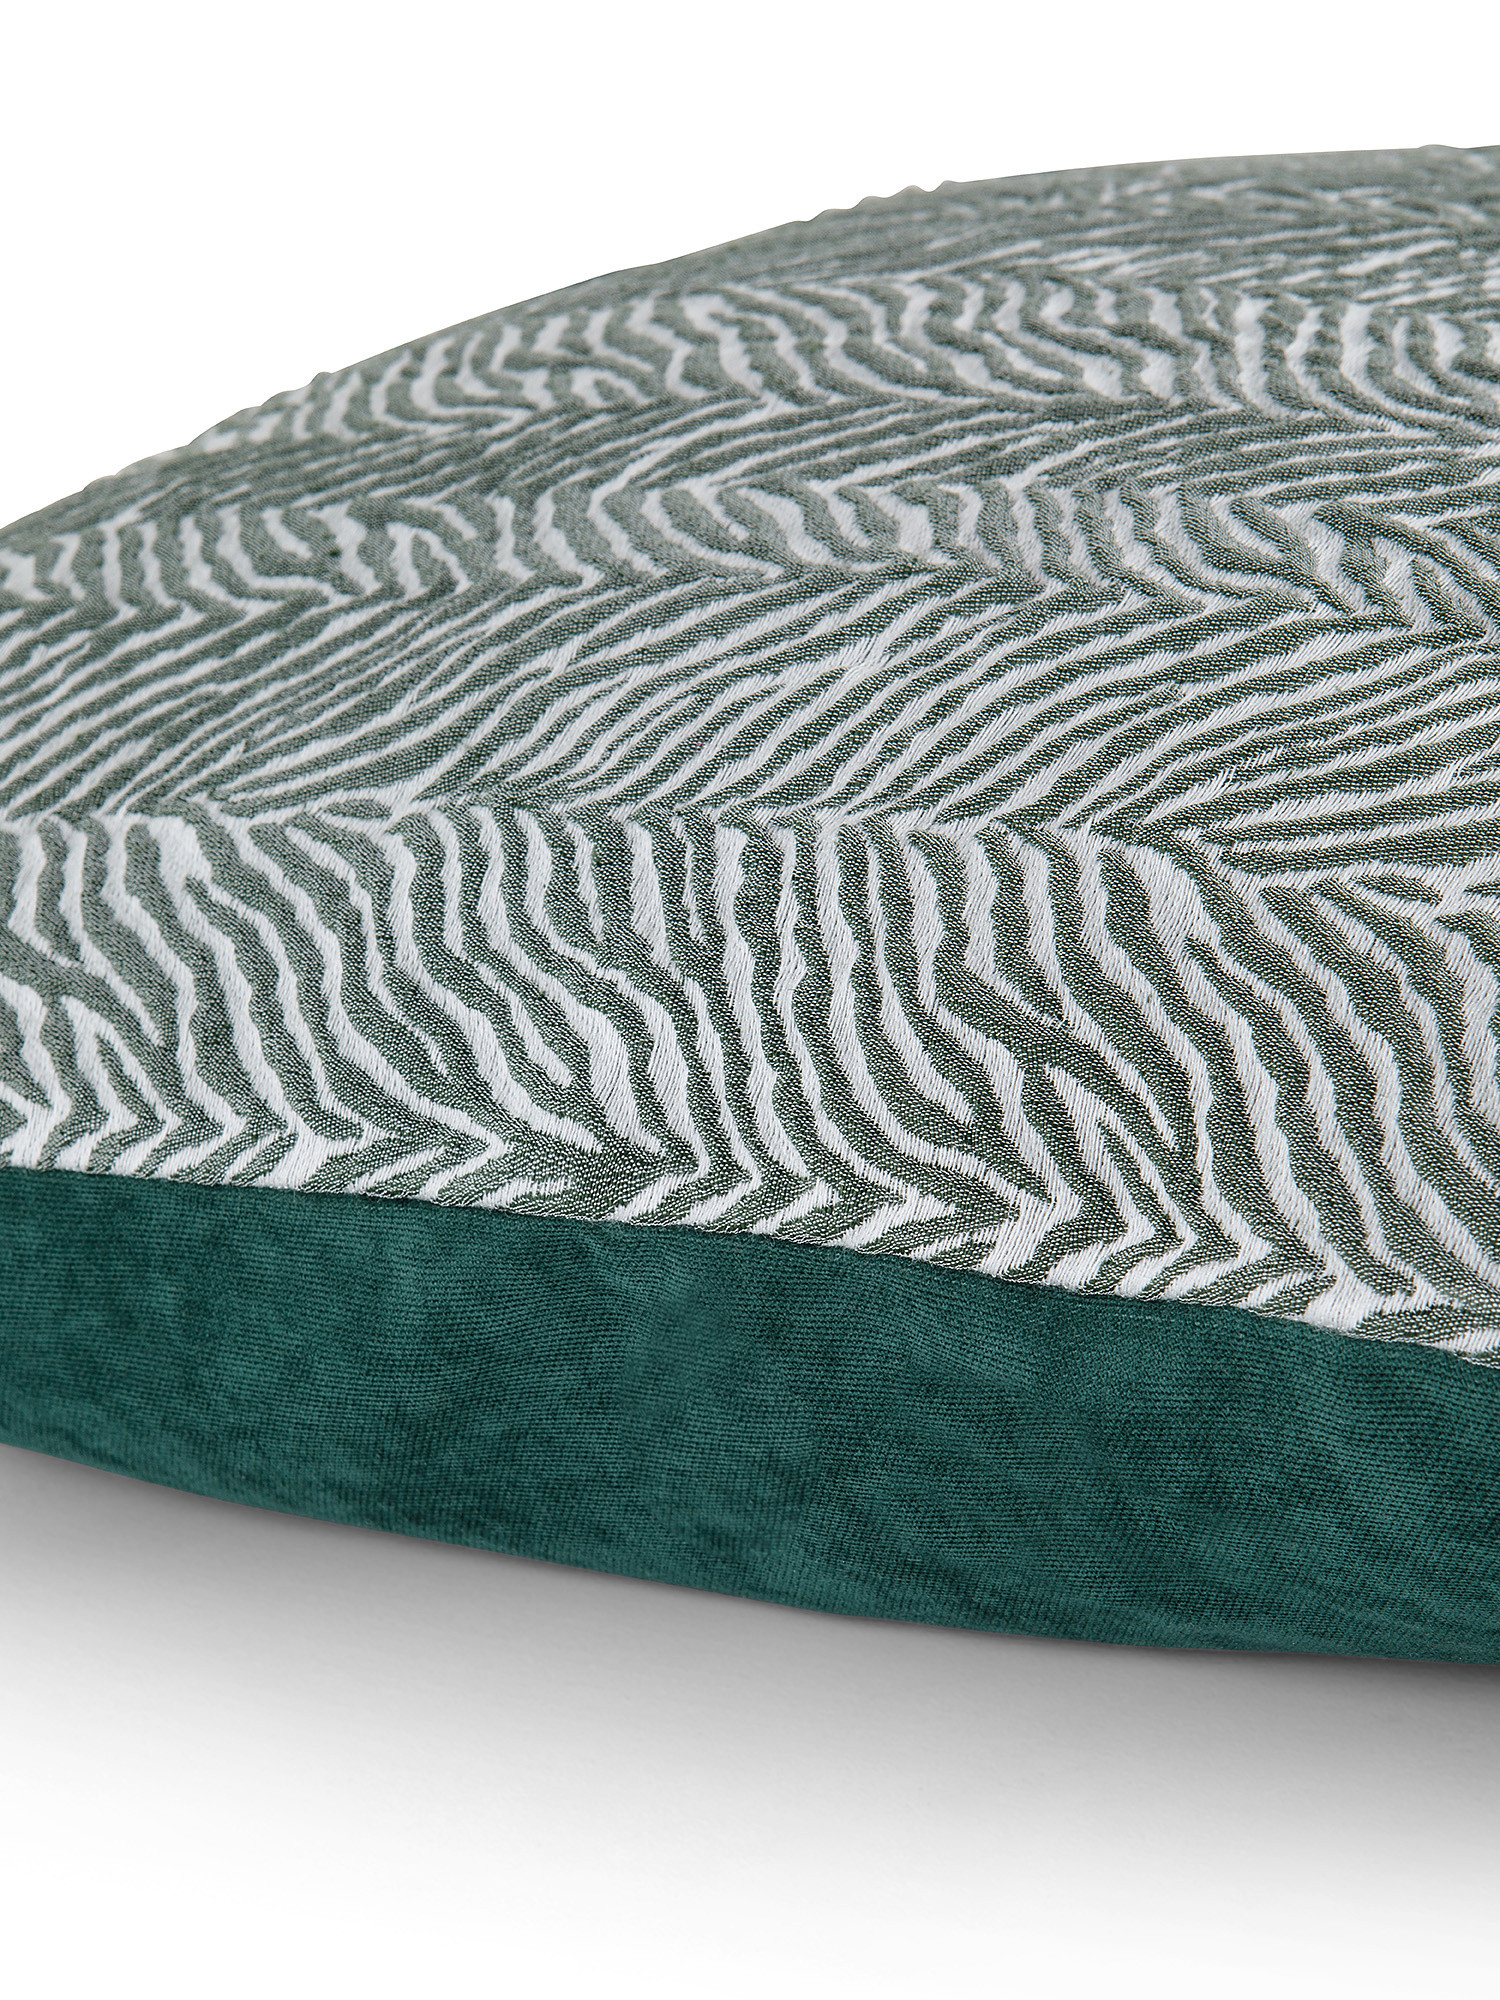 Cuscino jacquard motivo zebra 50x50cm, Verde, large image number 2